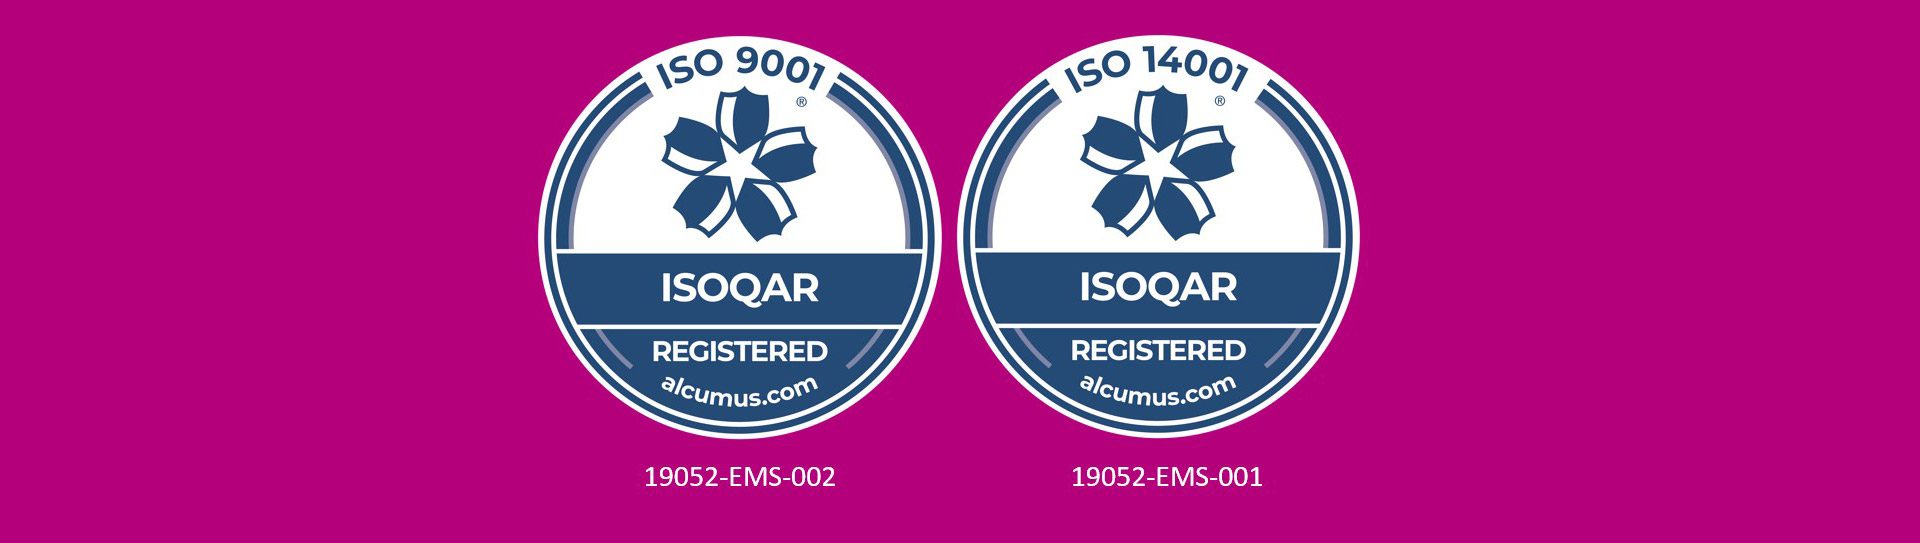 Twin ISO Logos